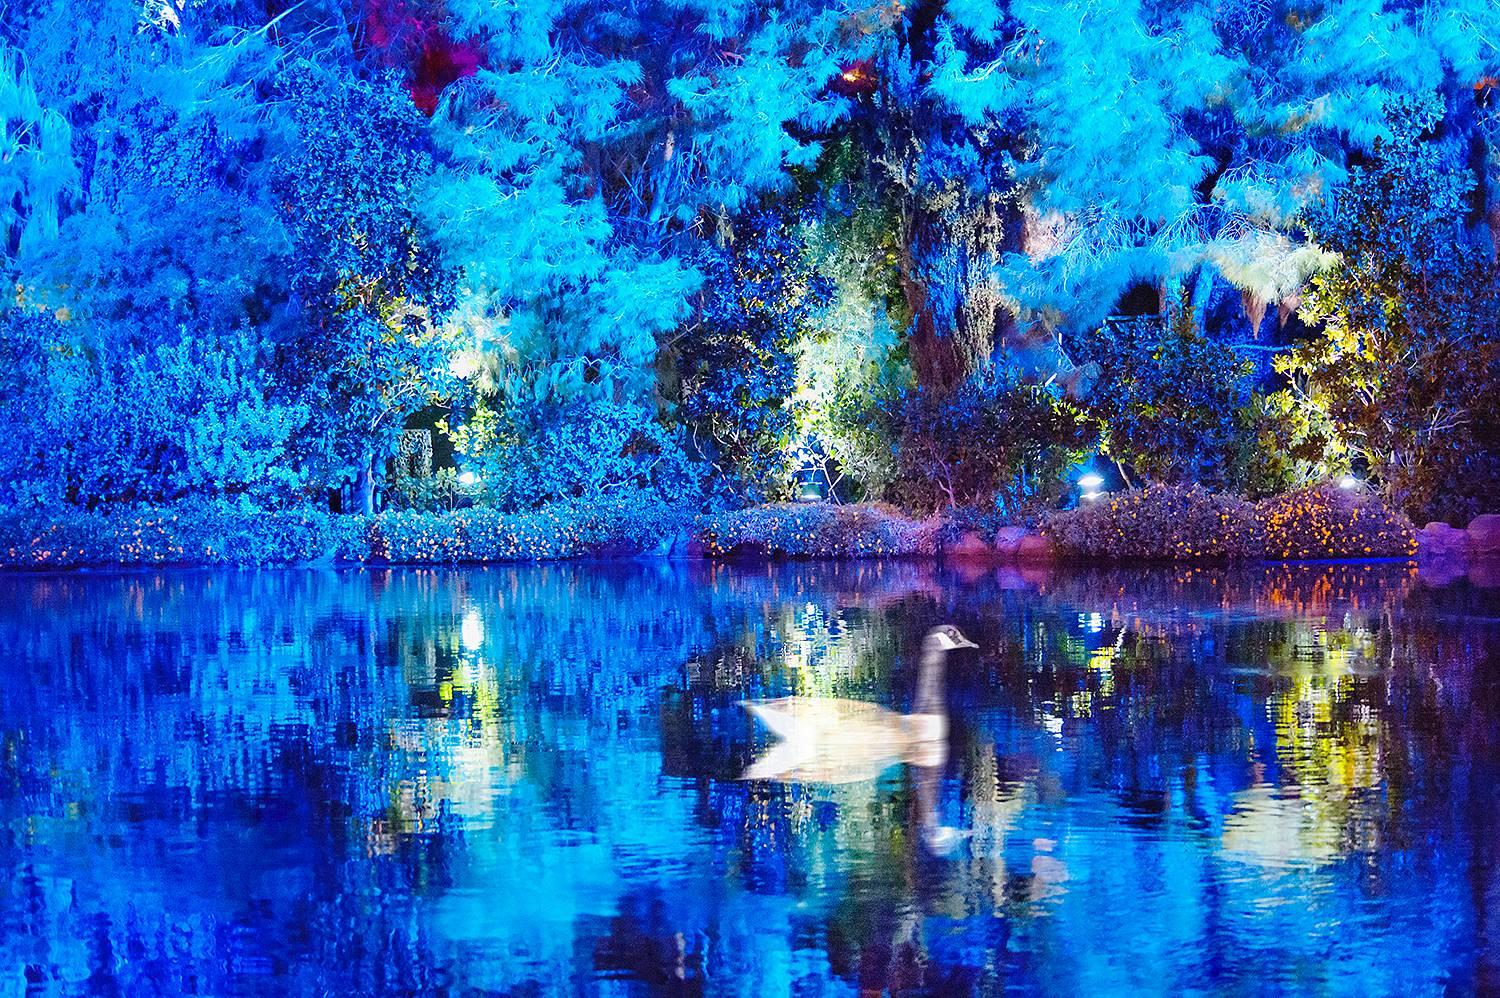 Fairy tale Blue Duck Glides on a Magical Blue Pond 